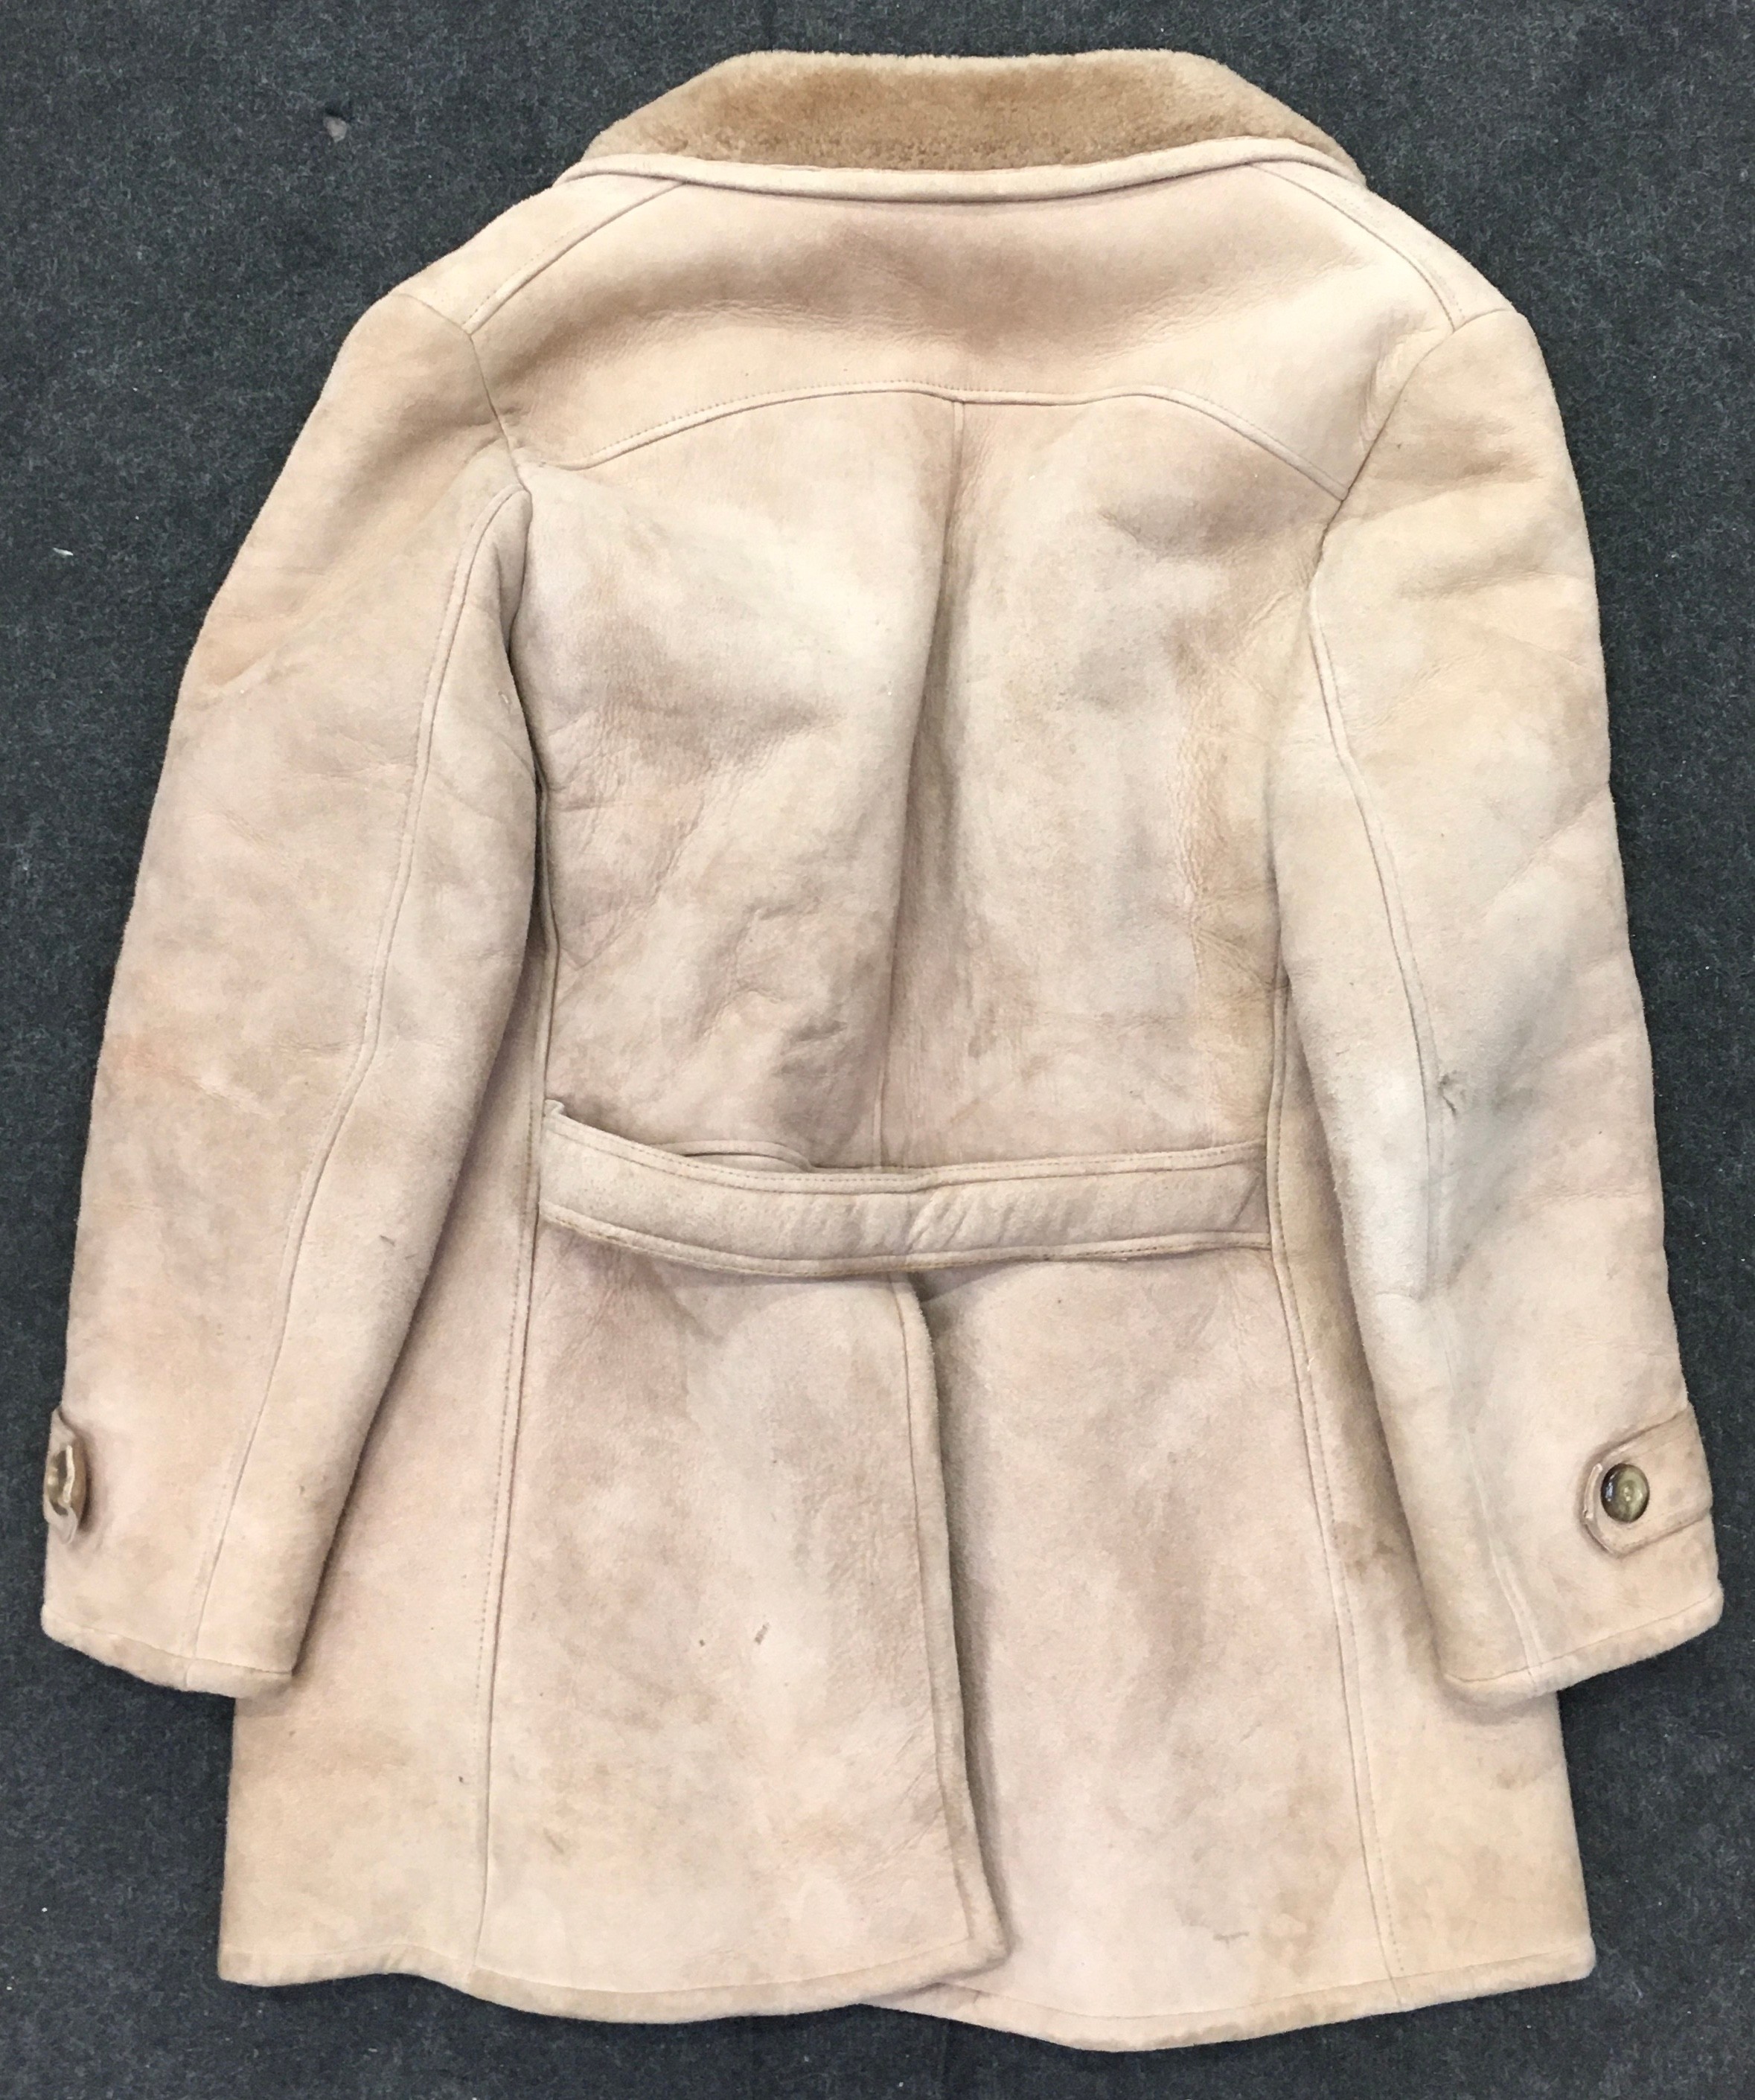 Gents leather and sheepskin jacket size 40. - Image 2 of 3